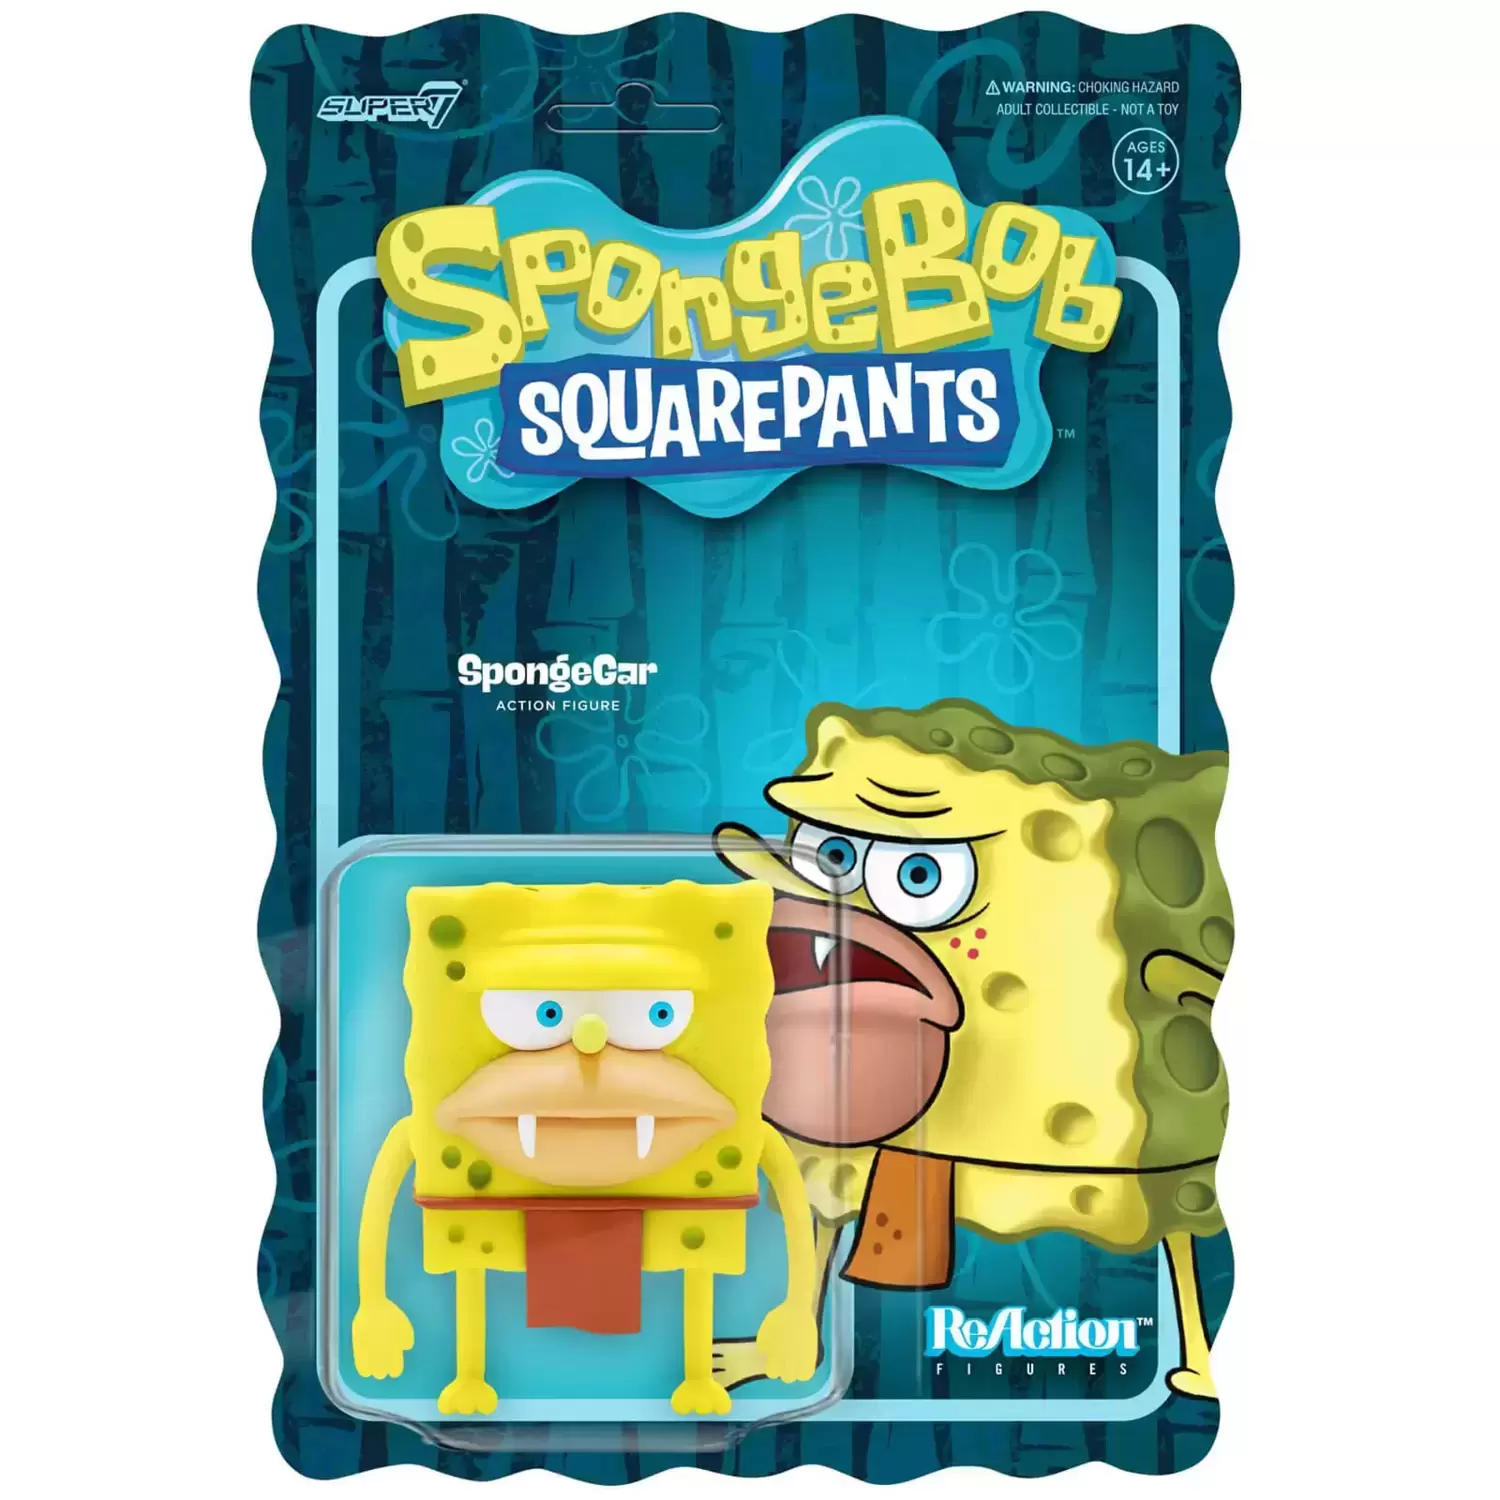 ReAction Figures - Spongebob Squarepants - SpongeGar